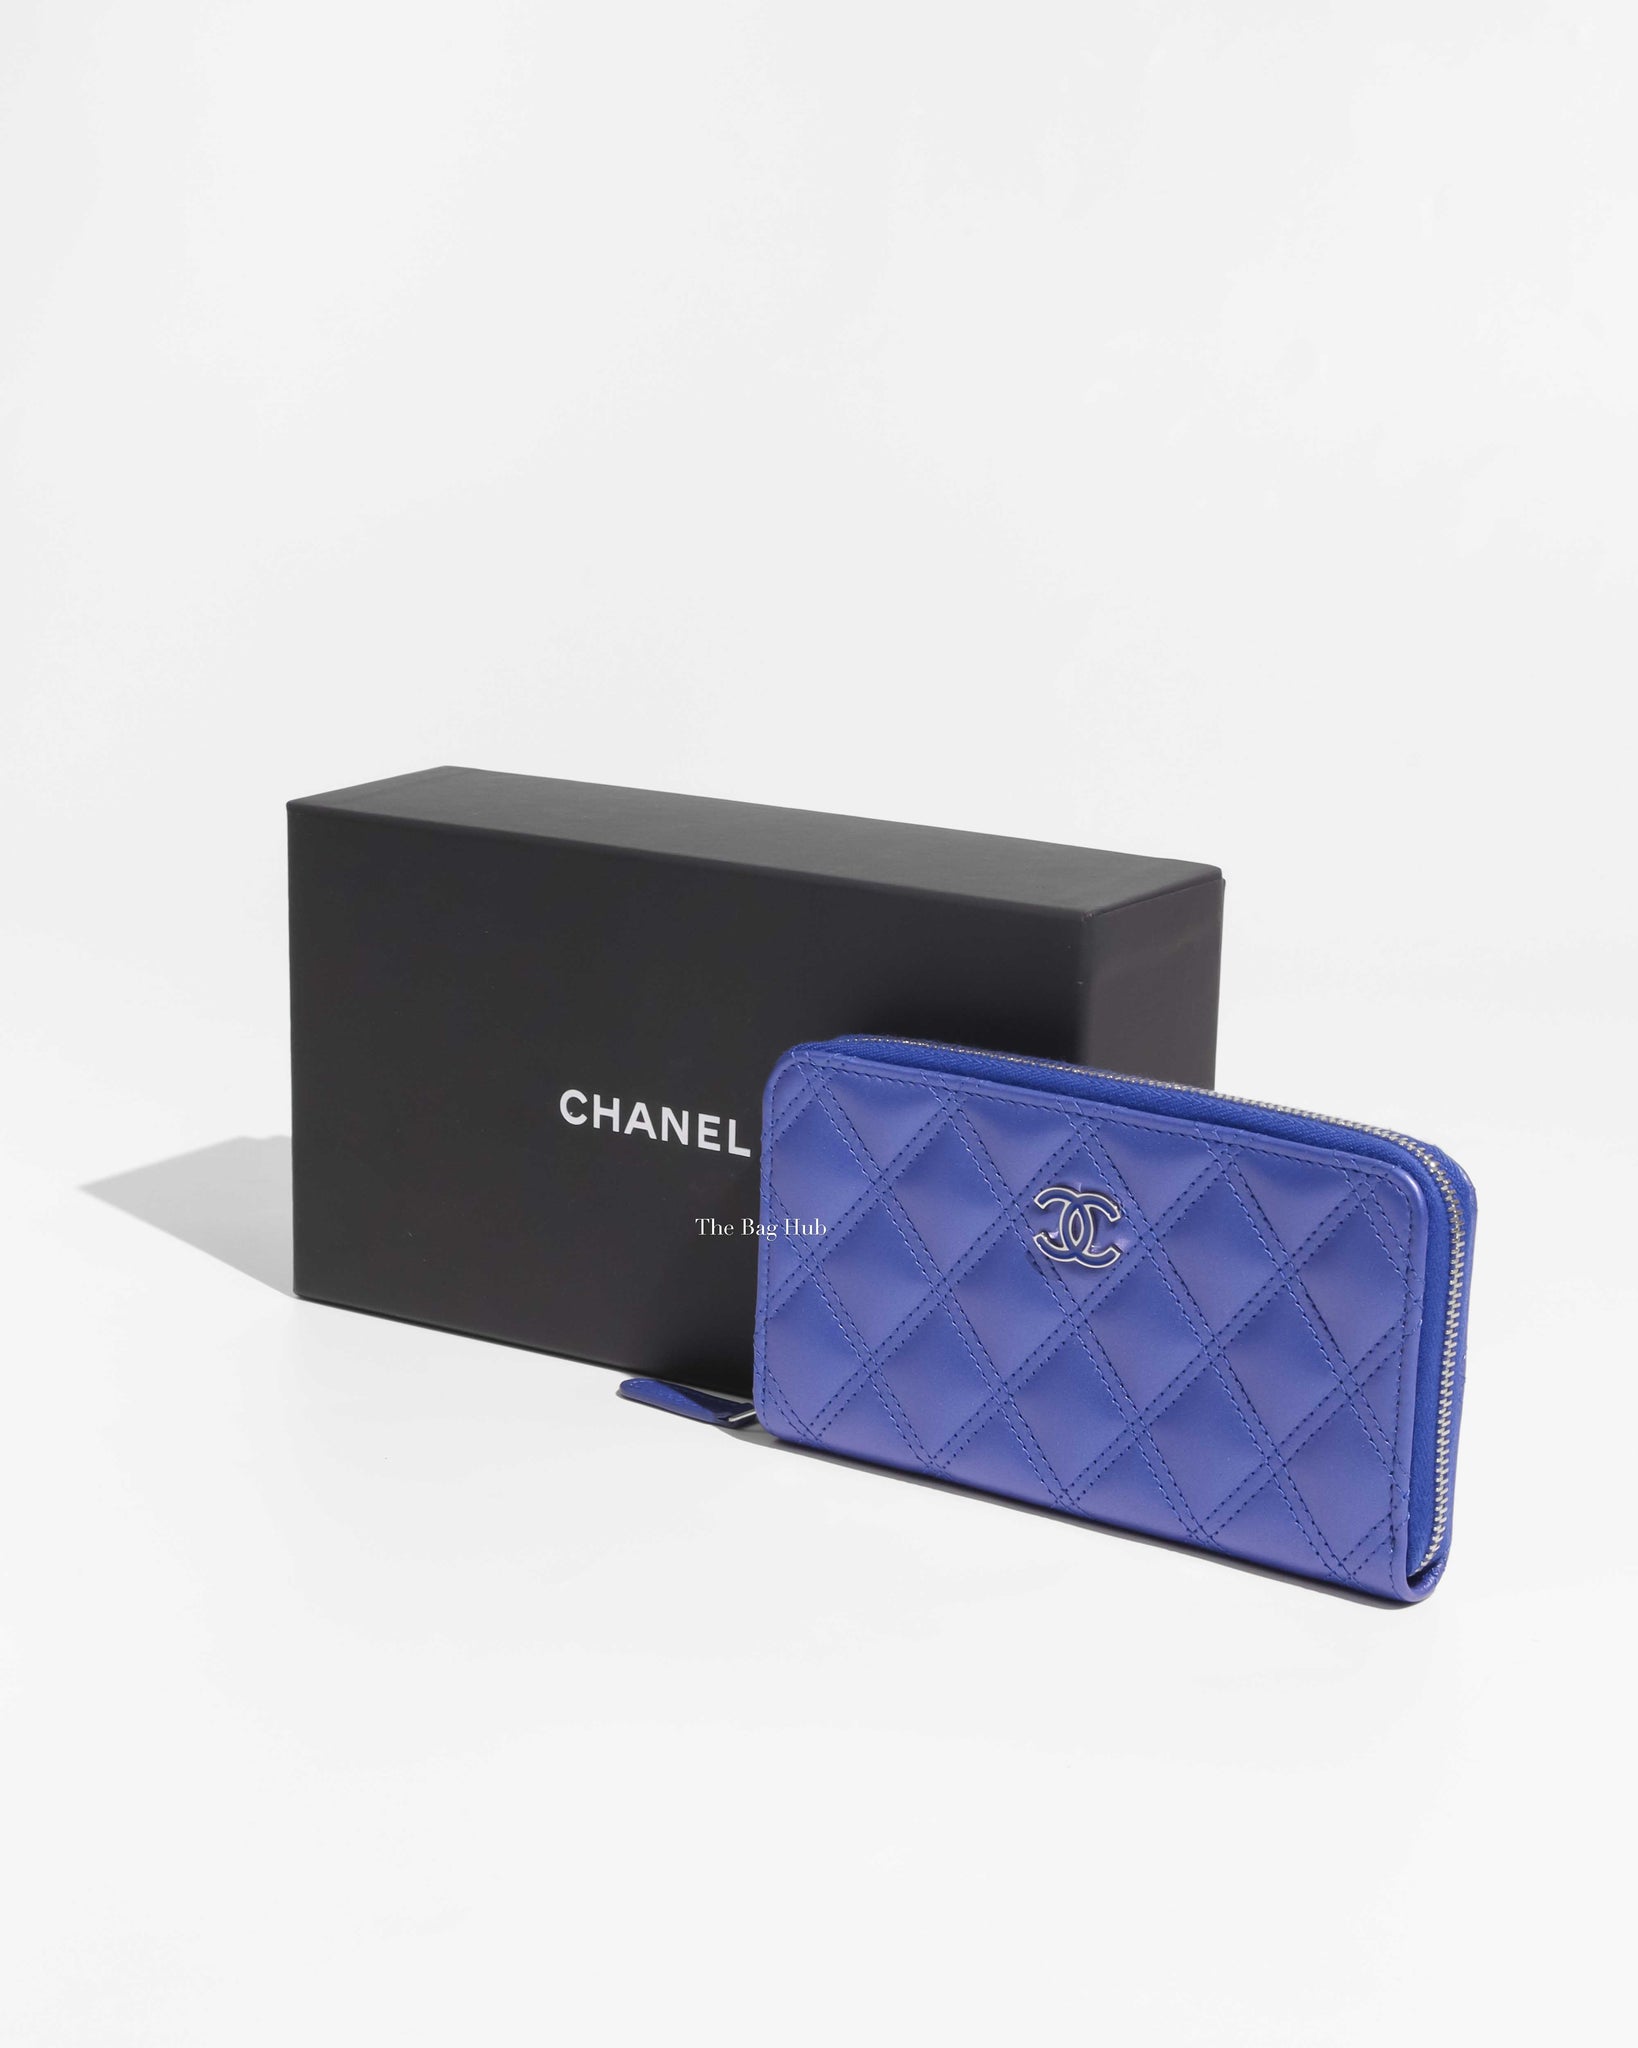 Chanel Metallic Blue/Violet Quilted Lambskin Small Zip Around Wallet, Designer Brand, Authentic Chanel